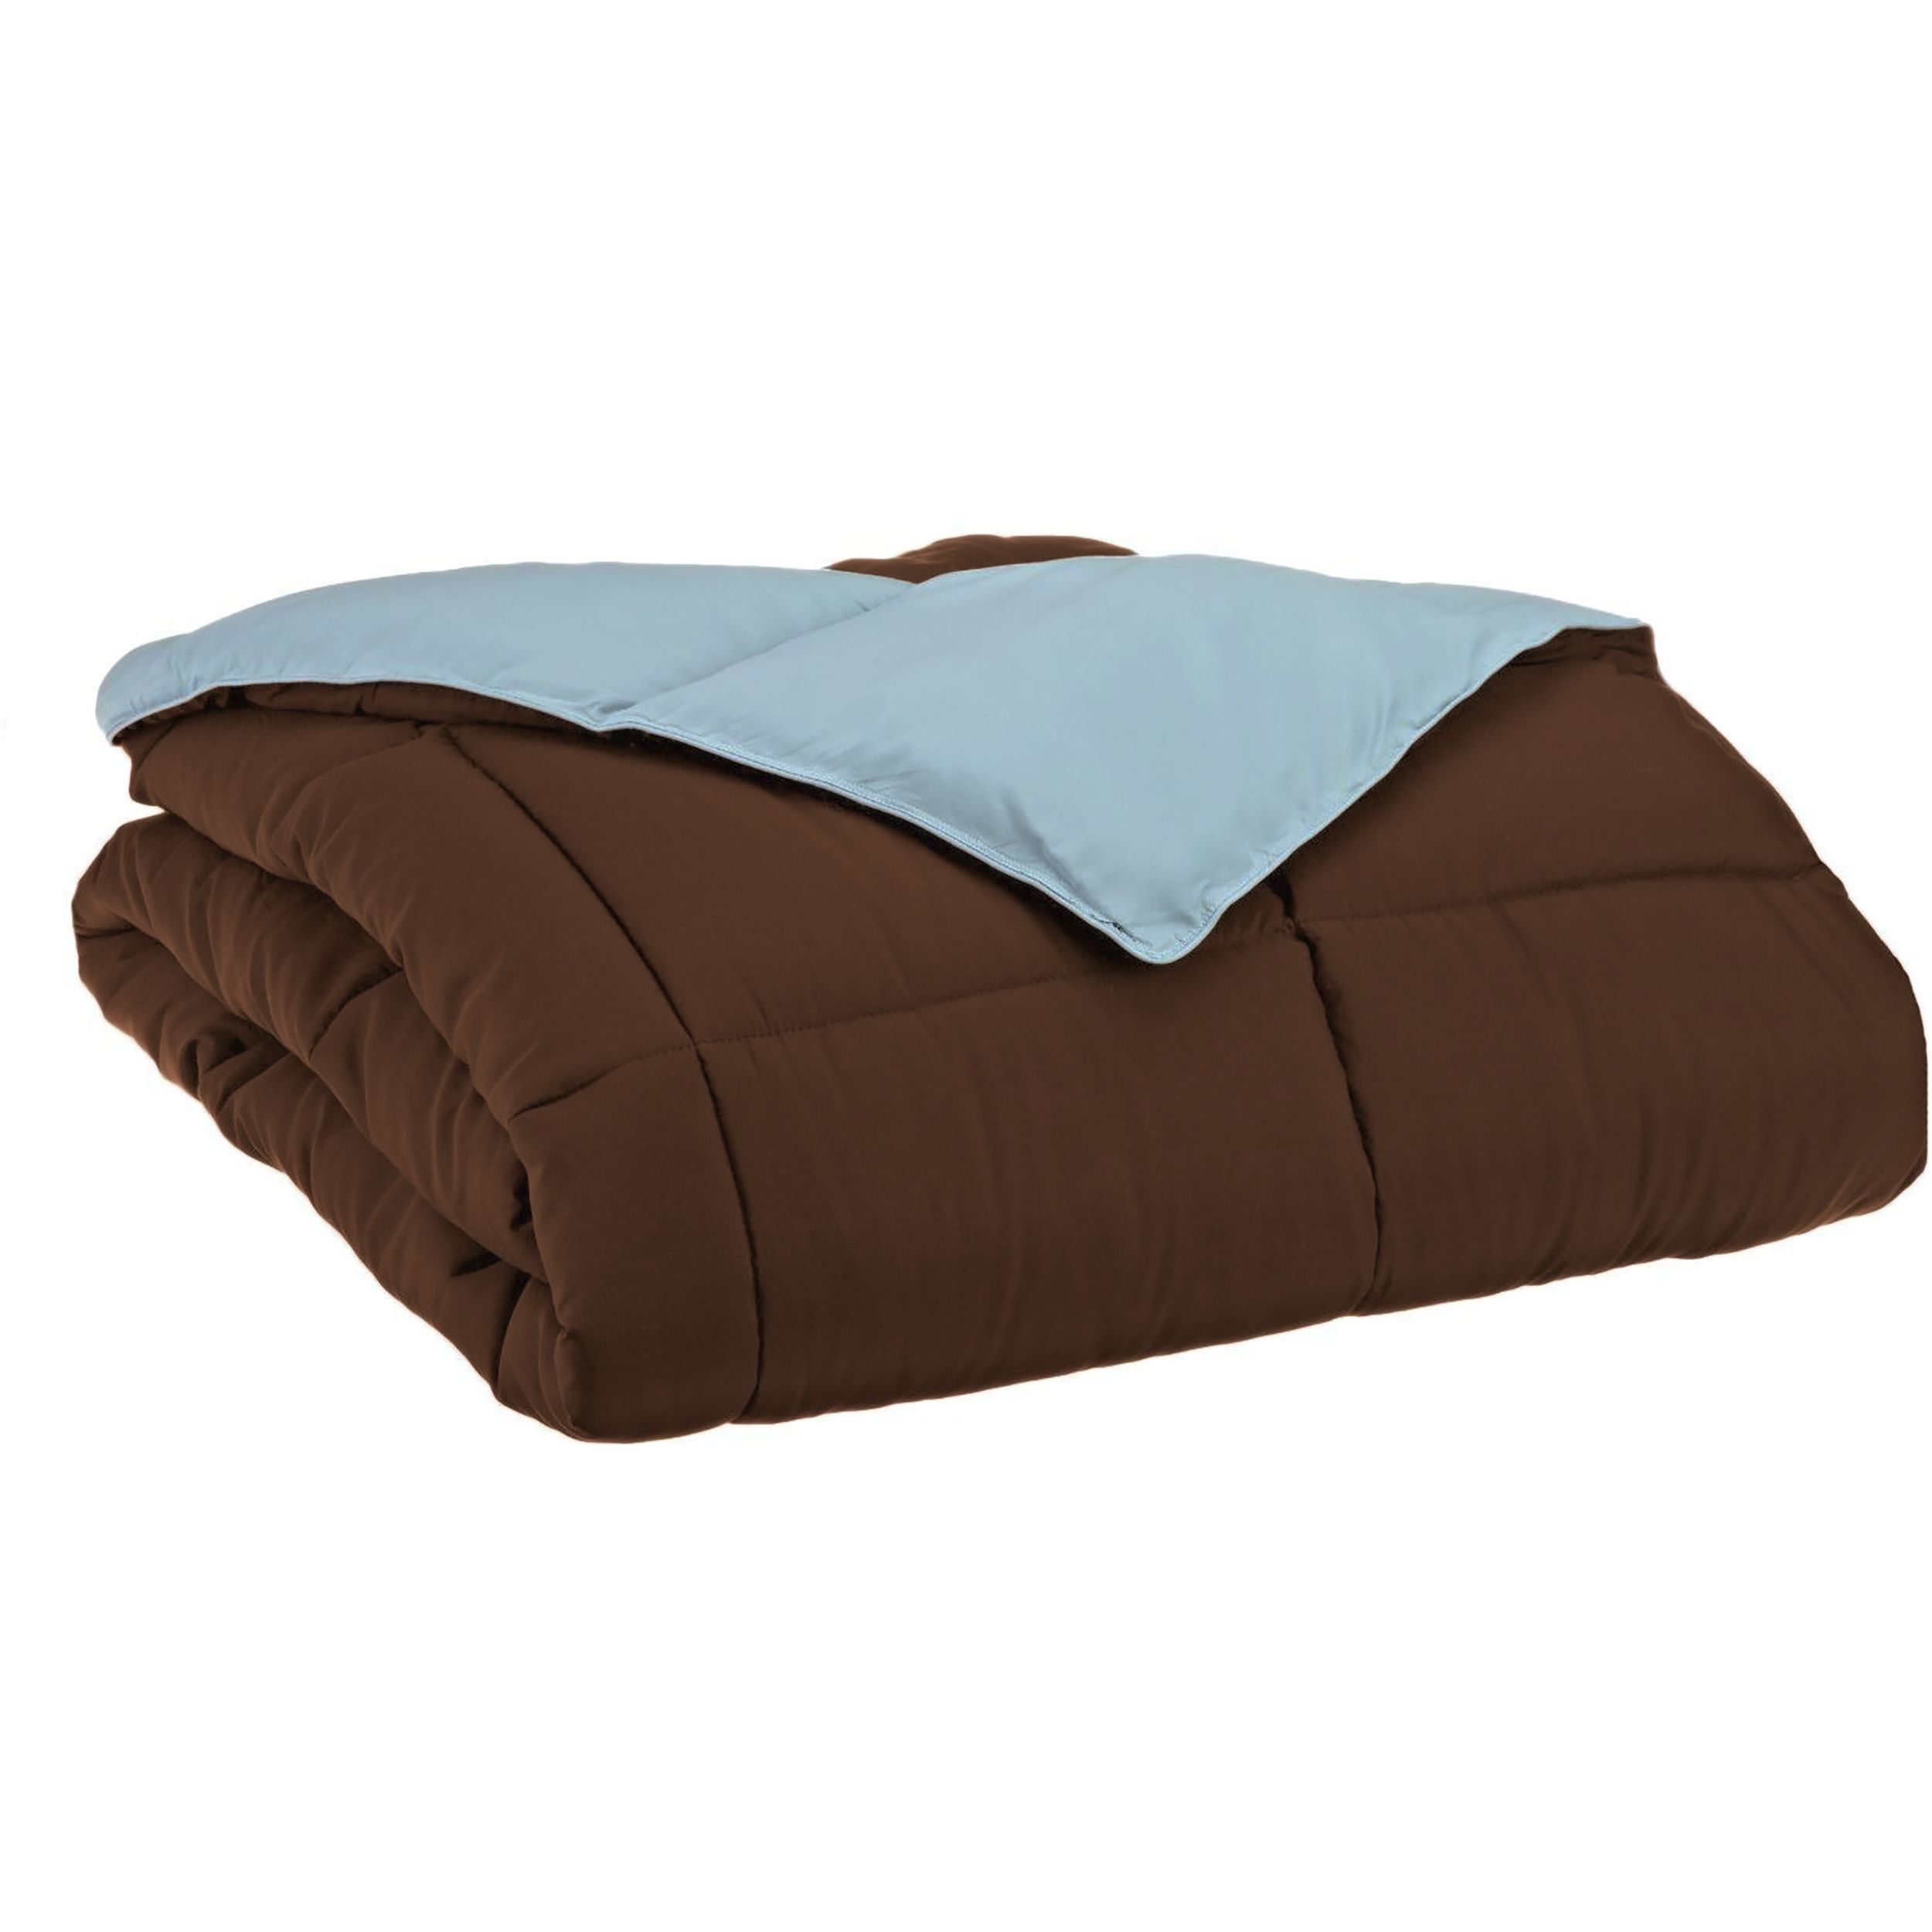 Superior Down Alternative Reversible Comforter, Full/ Queen, Choco/ Sky Blue - image 1 of 3